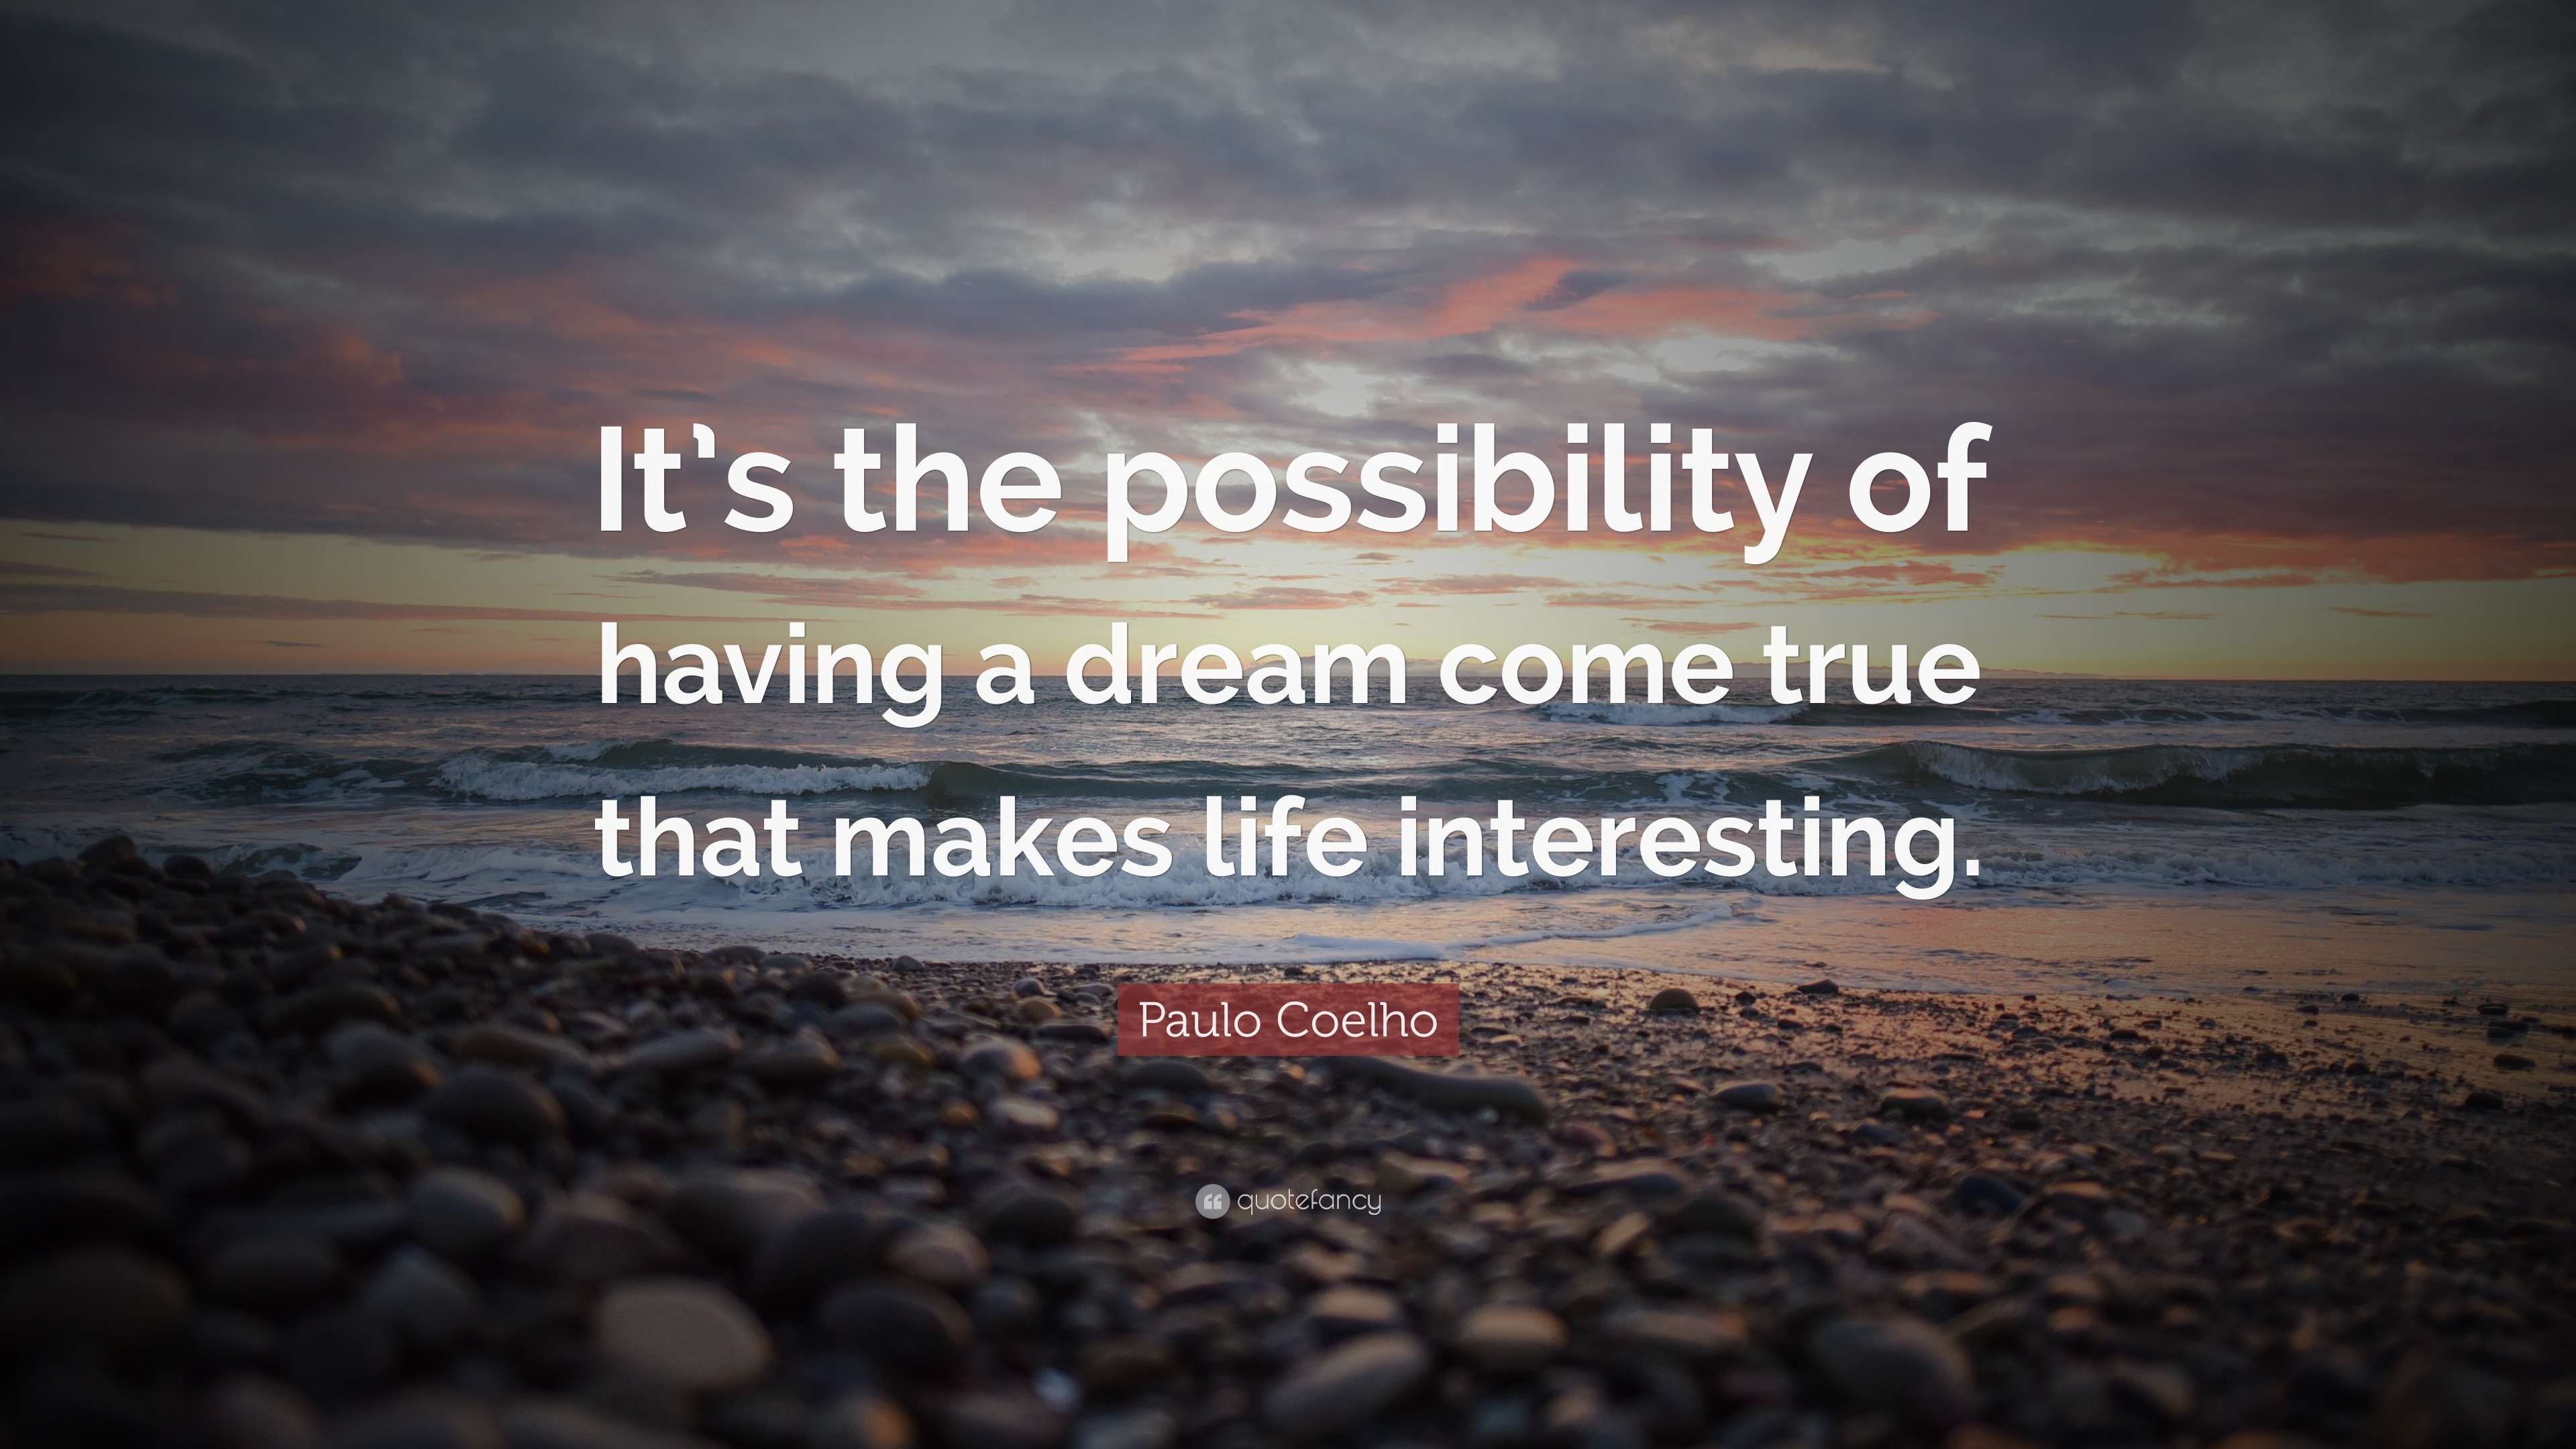 Paulo Coelho Quote: “It’s the possibility of having a dream come true